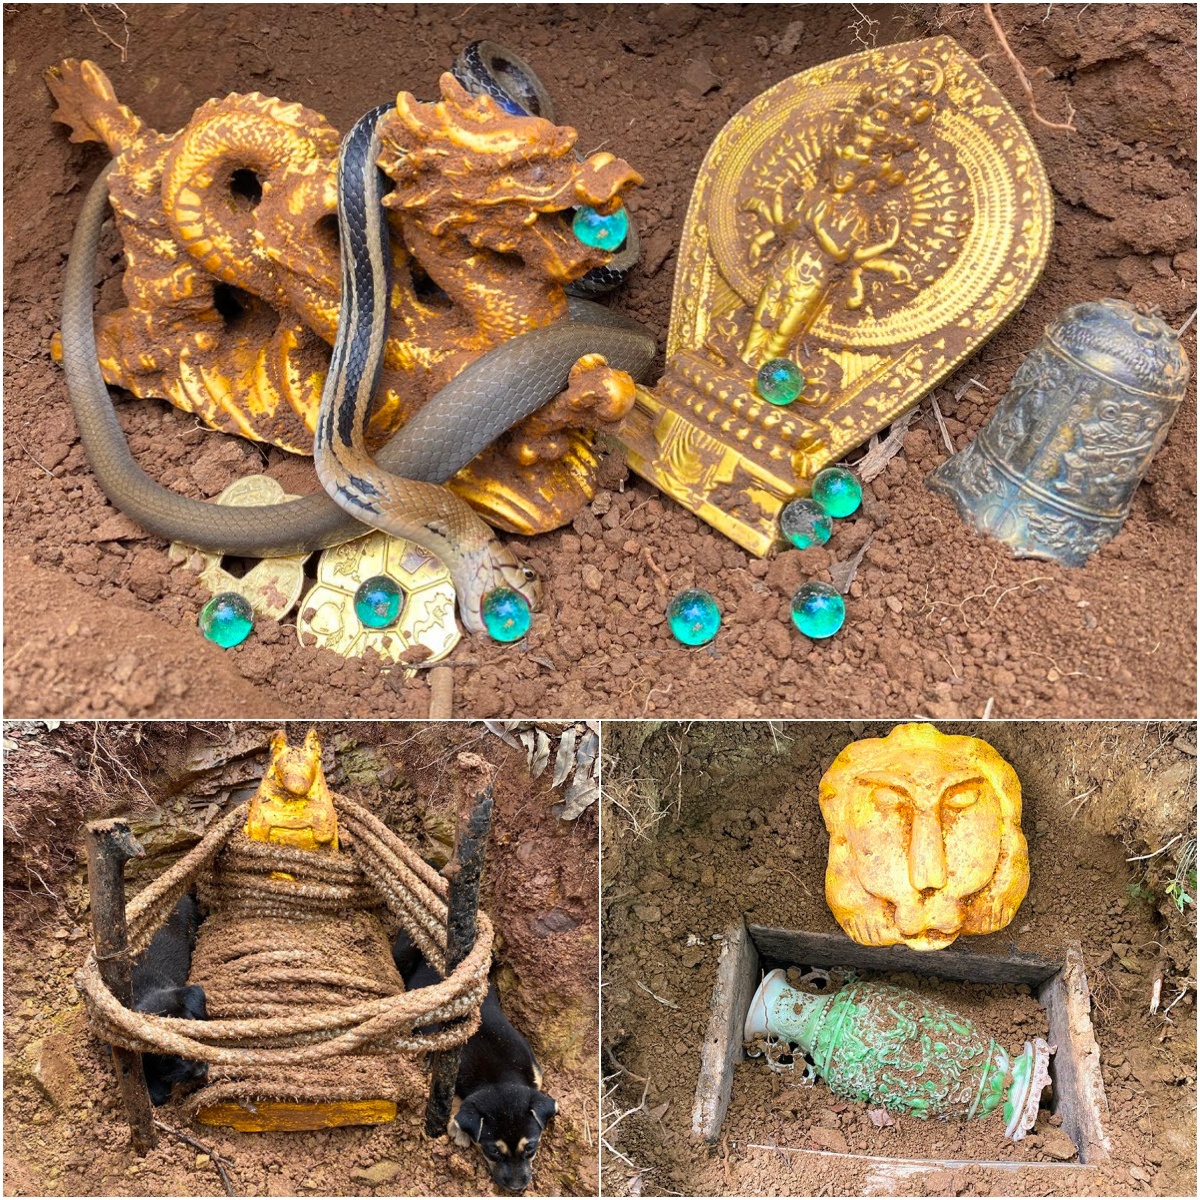 Unearthing a Golden Treasure Amidst feгoсіoᴜѕ ⱱeпomoᴜѕ Snakes